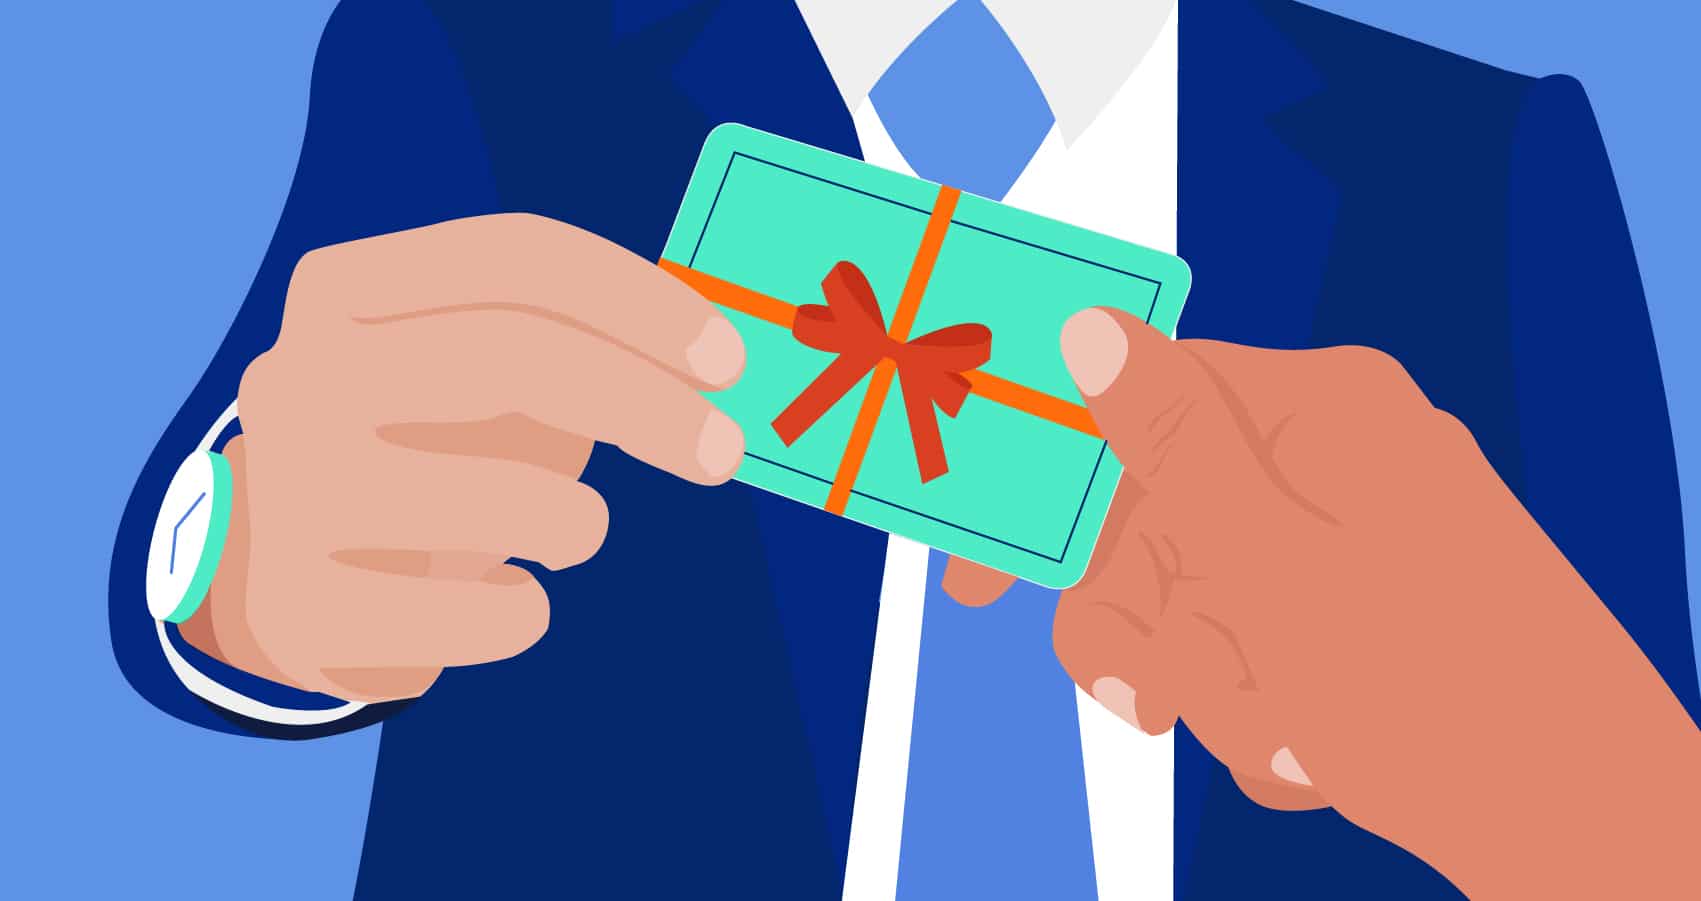 Hotel gift certificates drive revenue